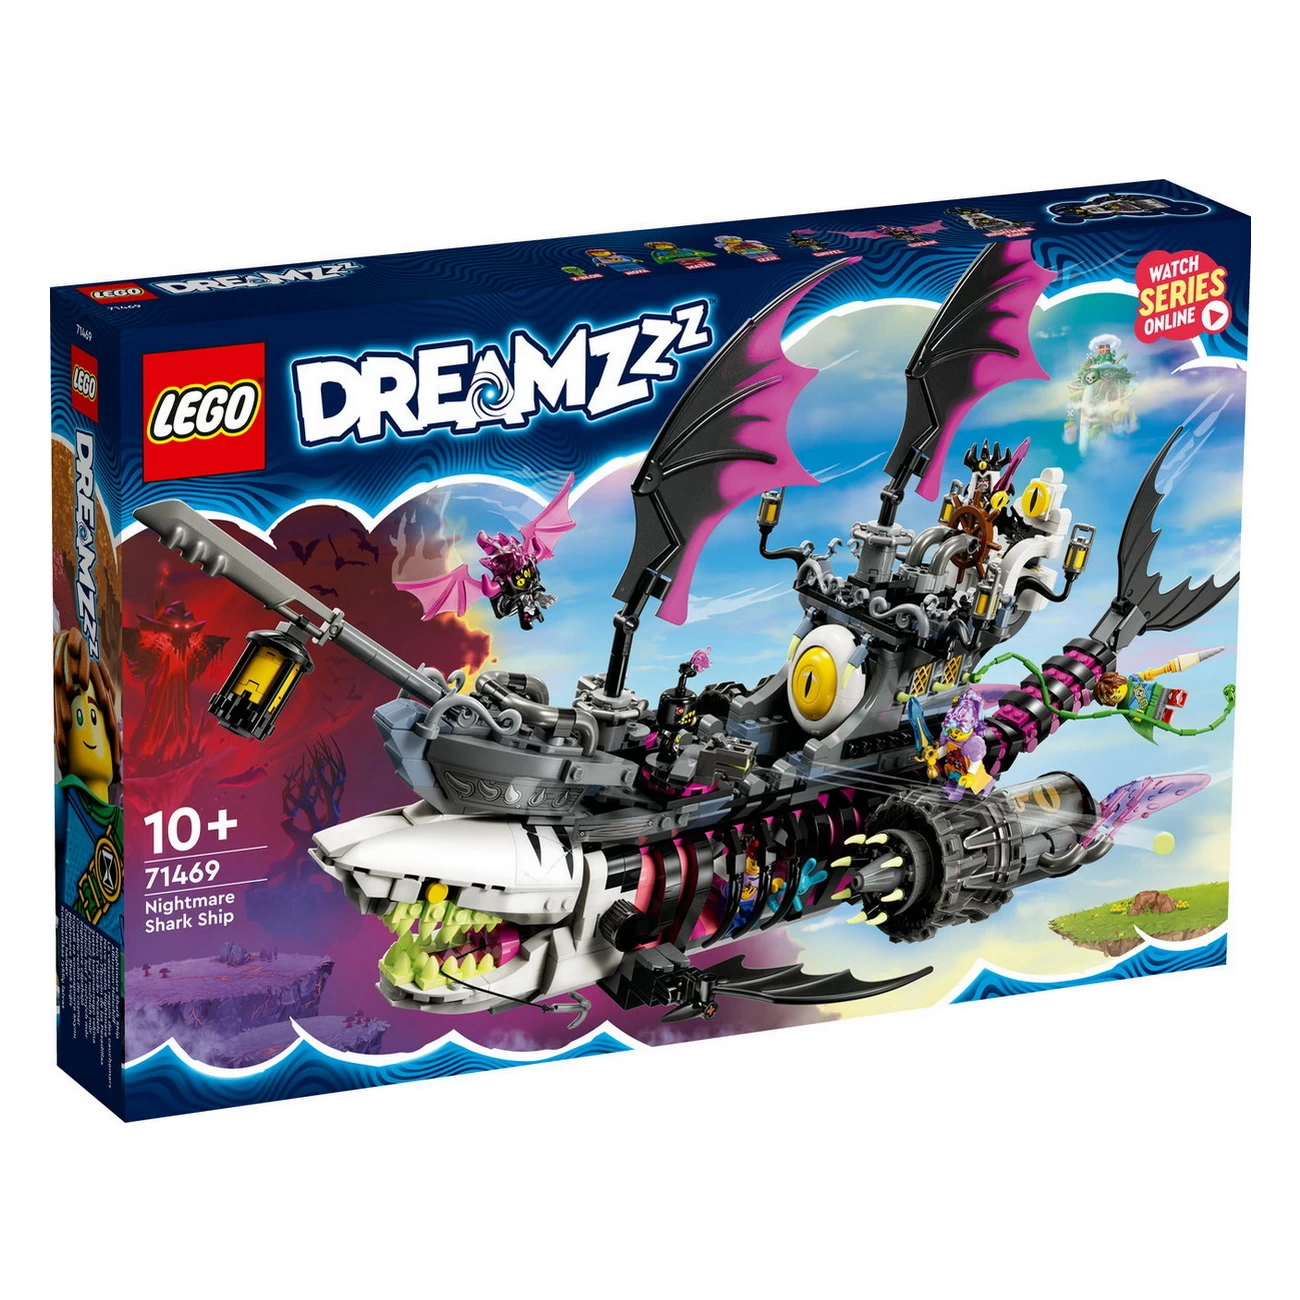 LEGO DREAMZzz - Albtraum-Haischiff - 71469